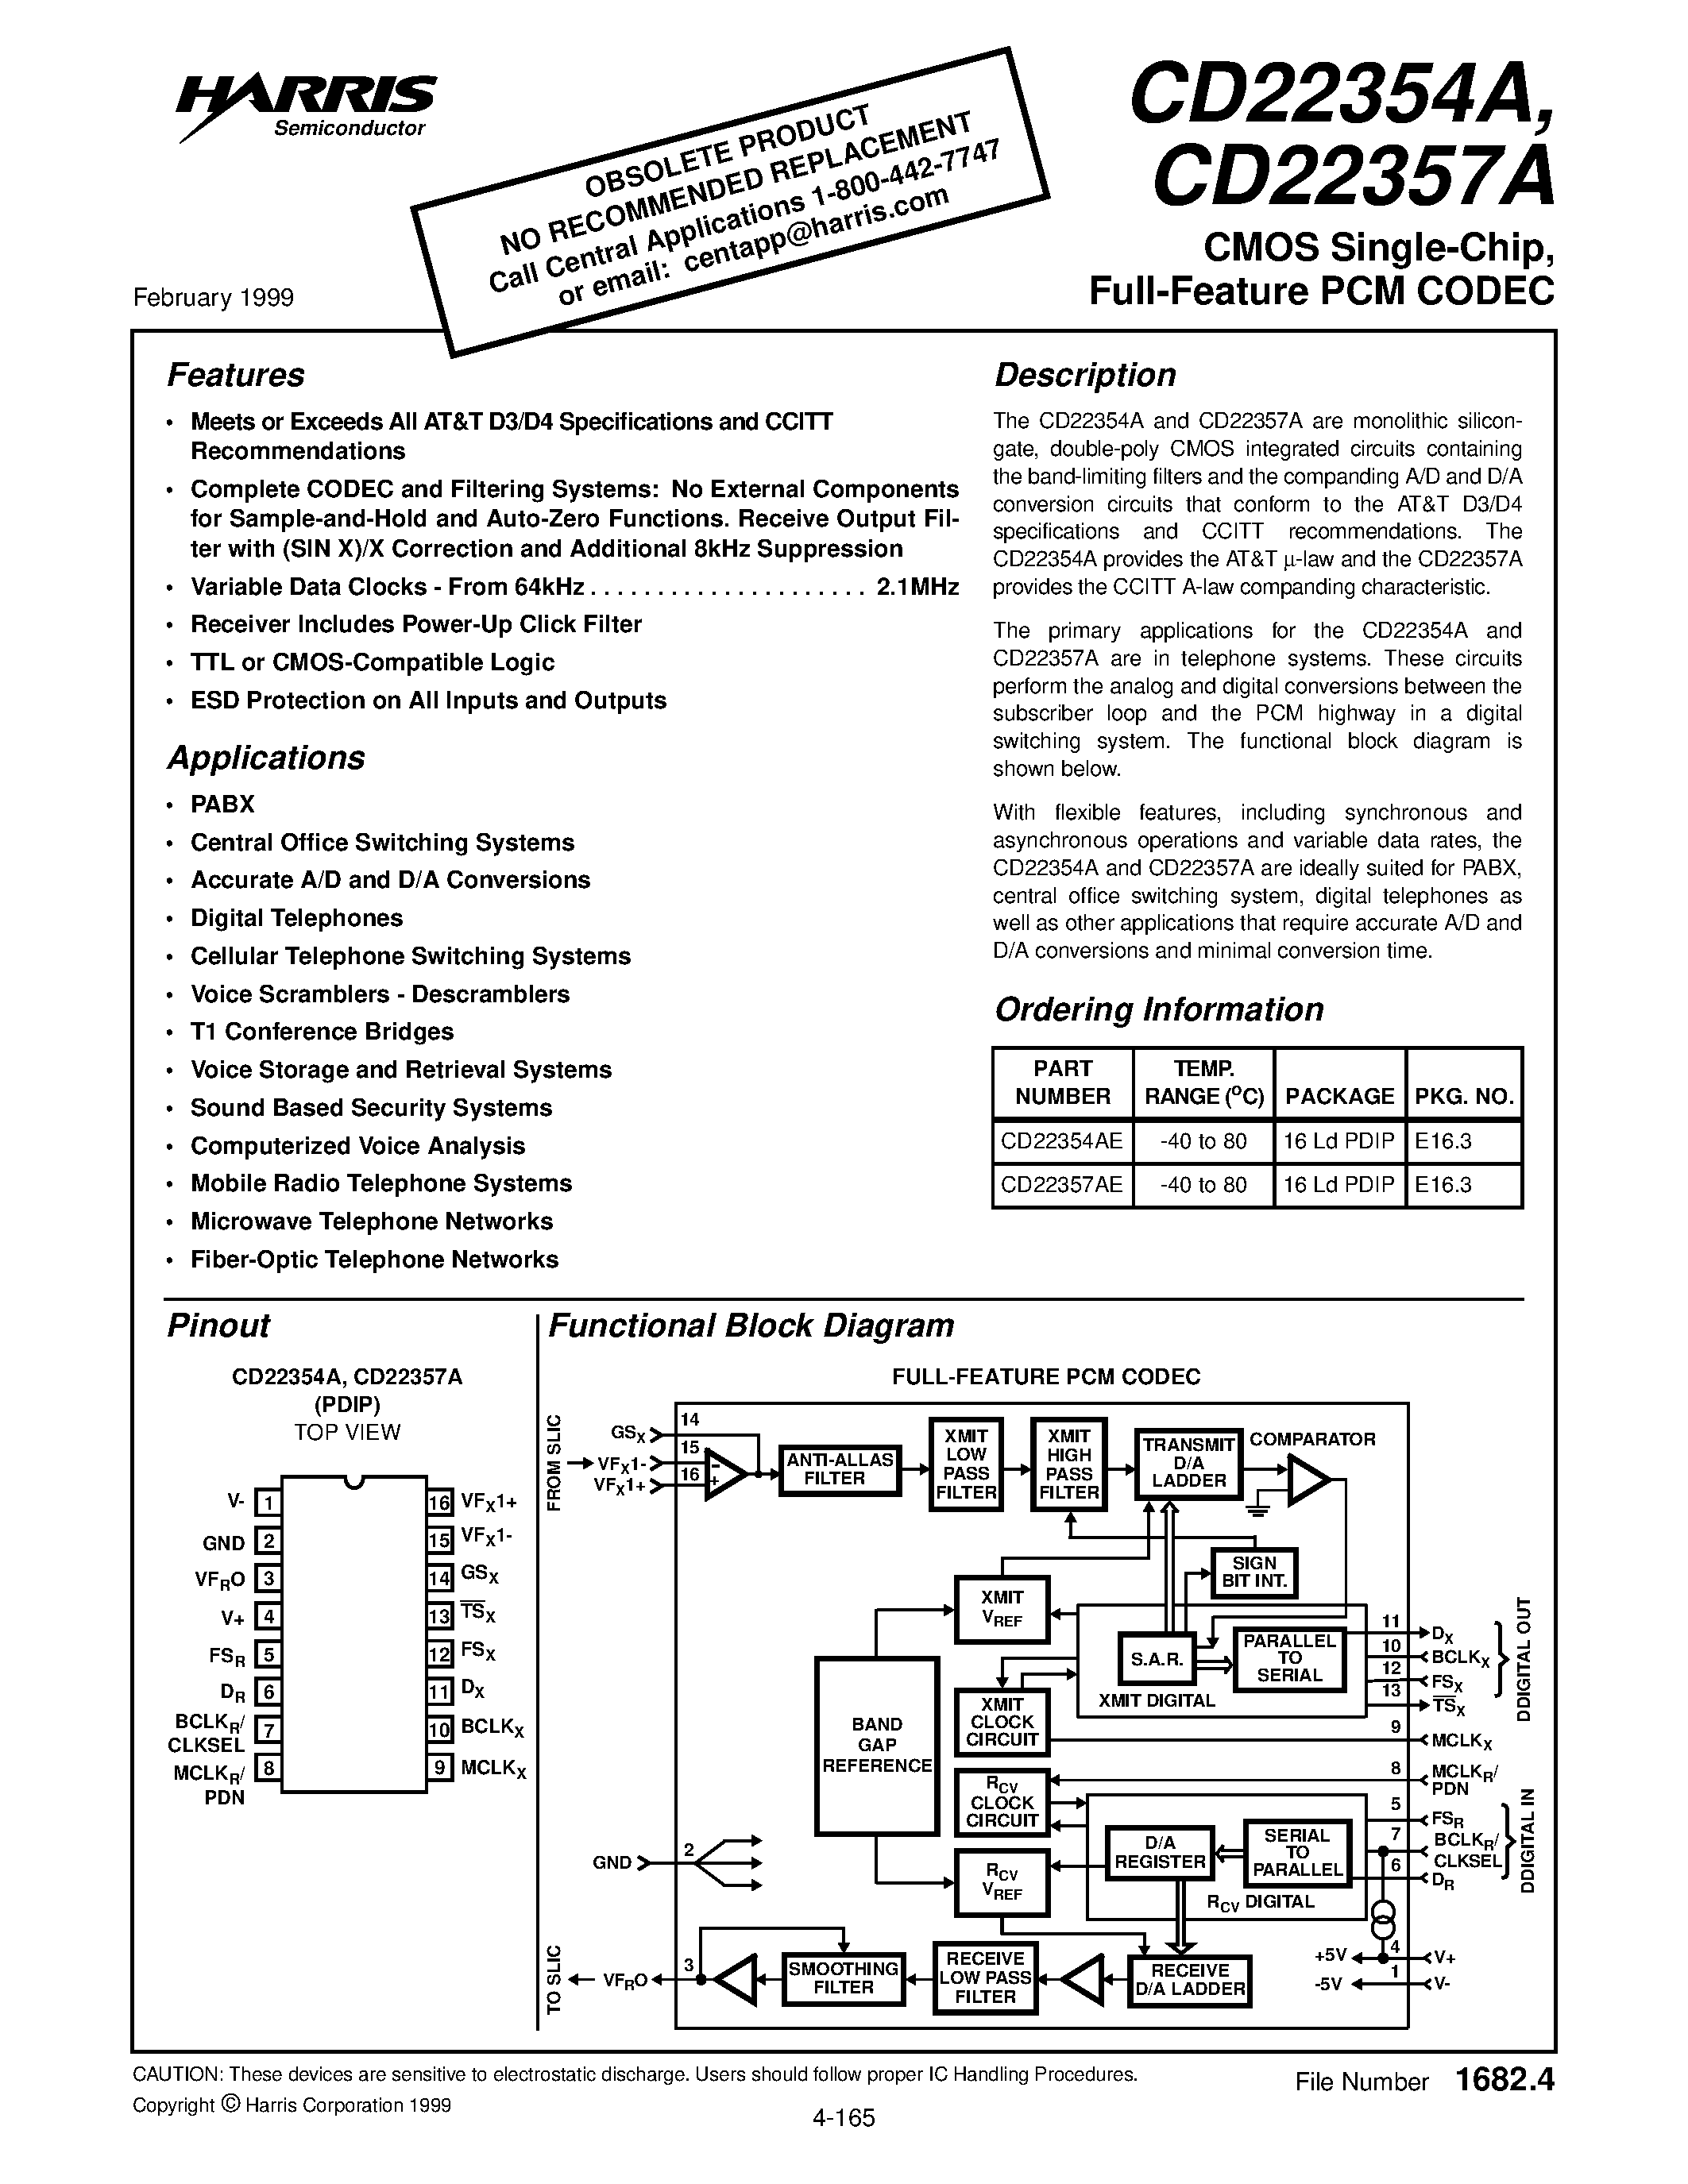 Даташит CD22357A - CMOS Single-Chip/ Full-Feature PCM CODEC страница 1